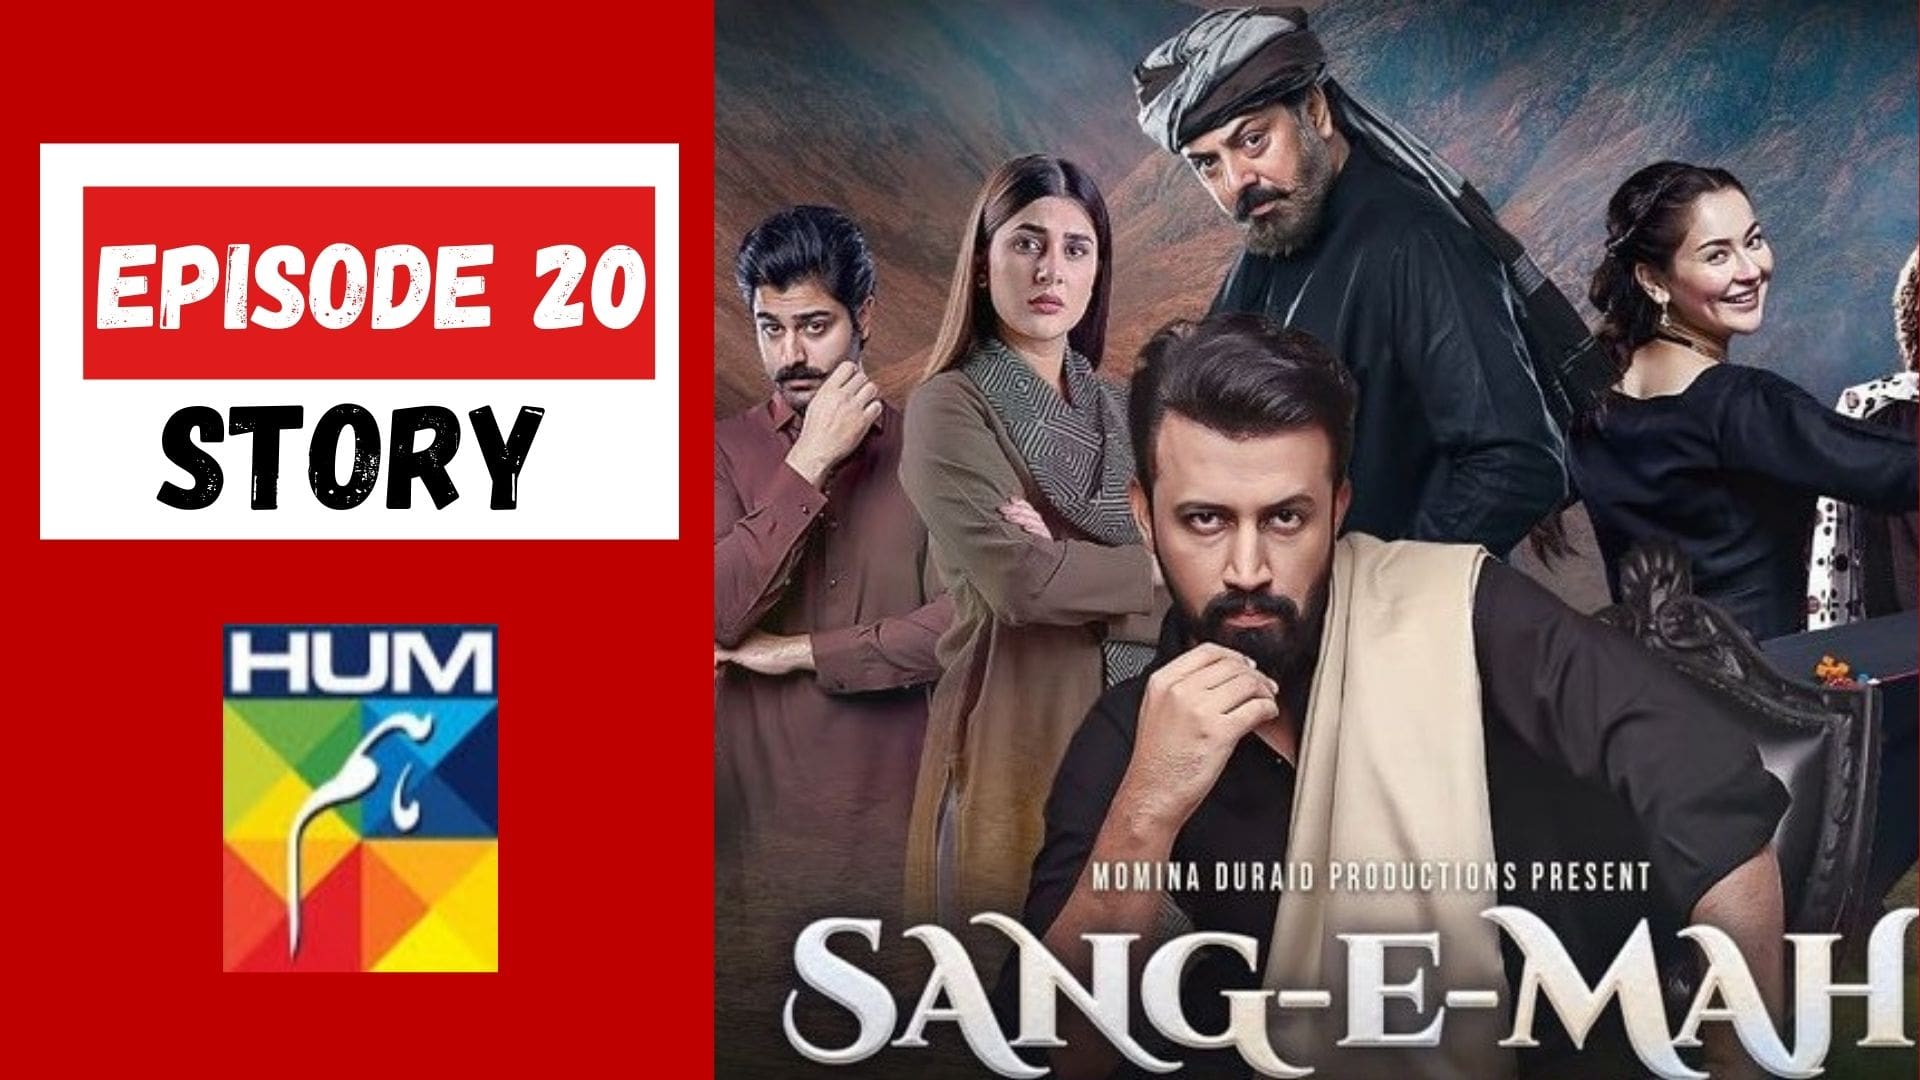 Sang-e-Mah Episode 20 Story